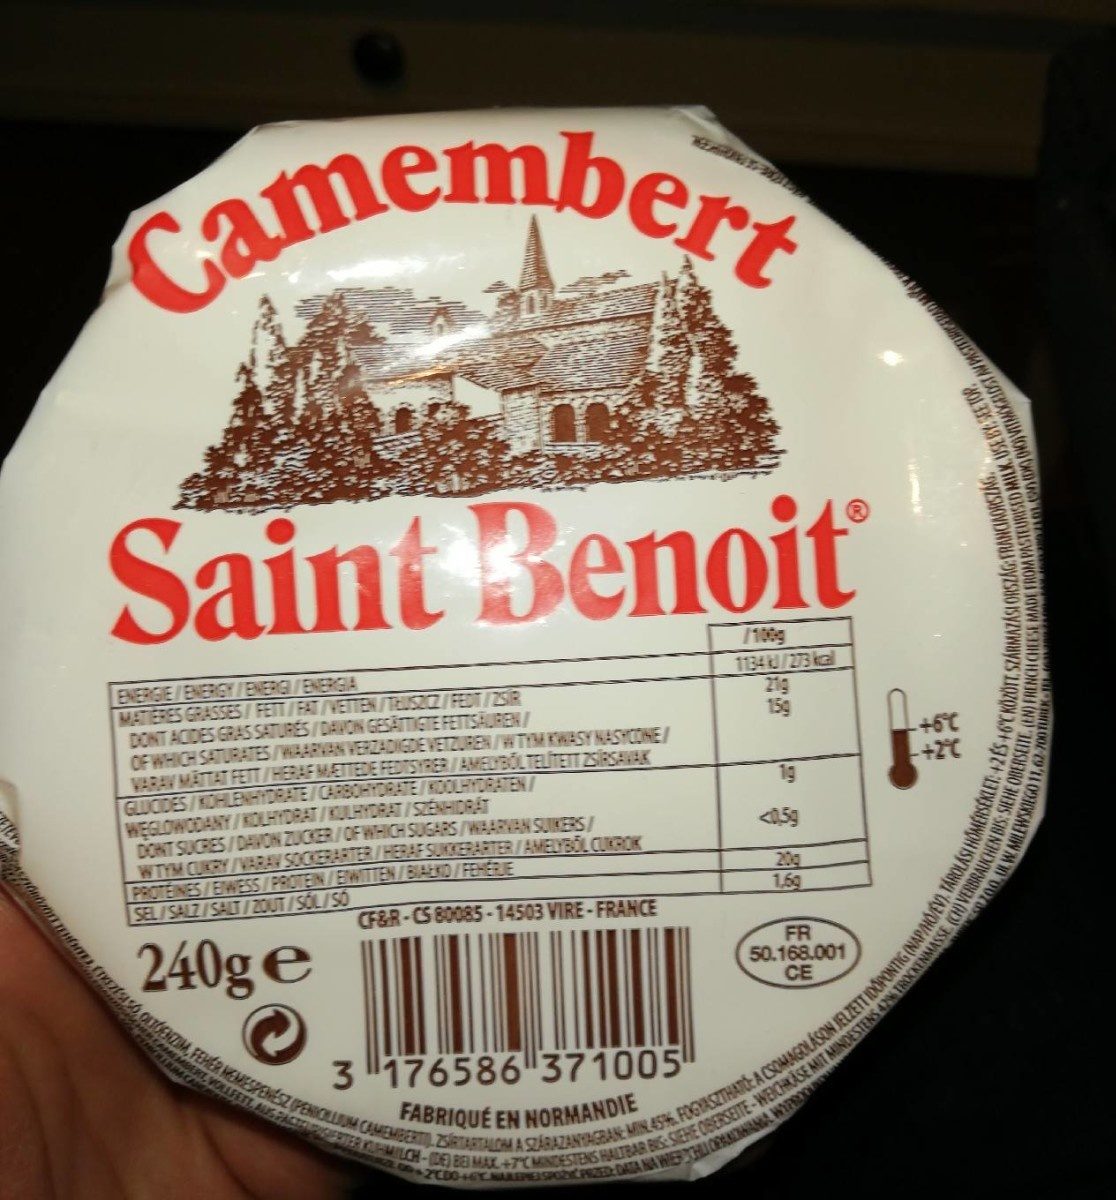 Camembert Saint-Benoît - Ingredients - fr